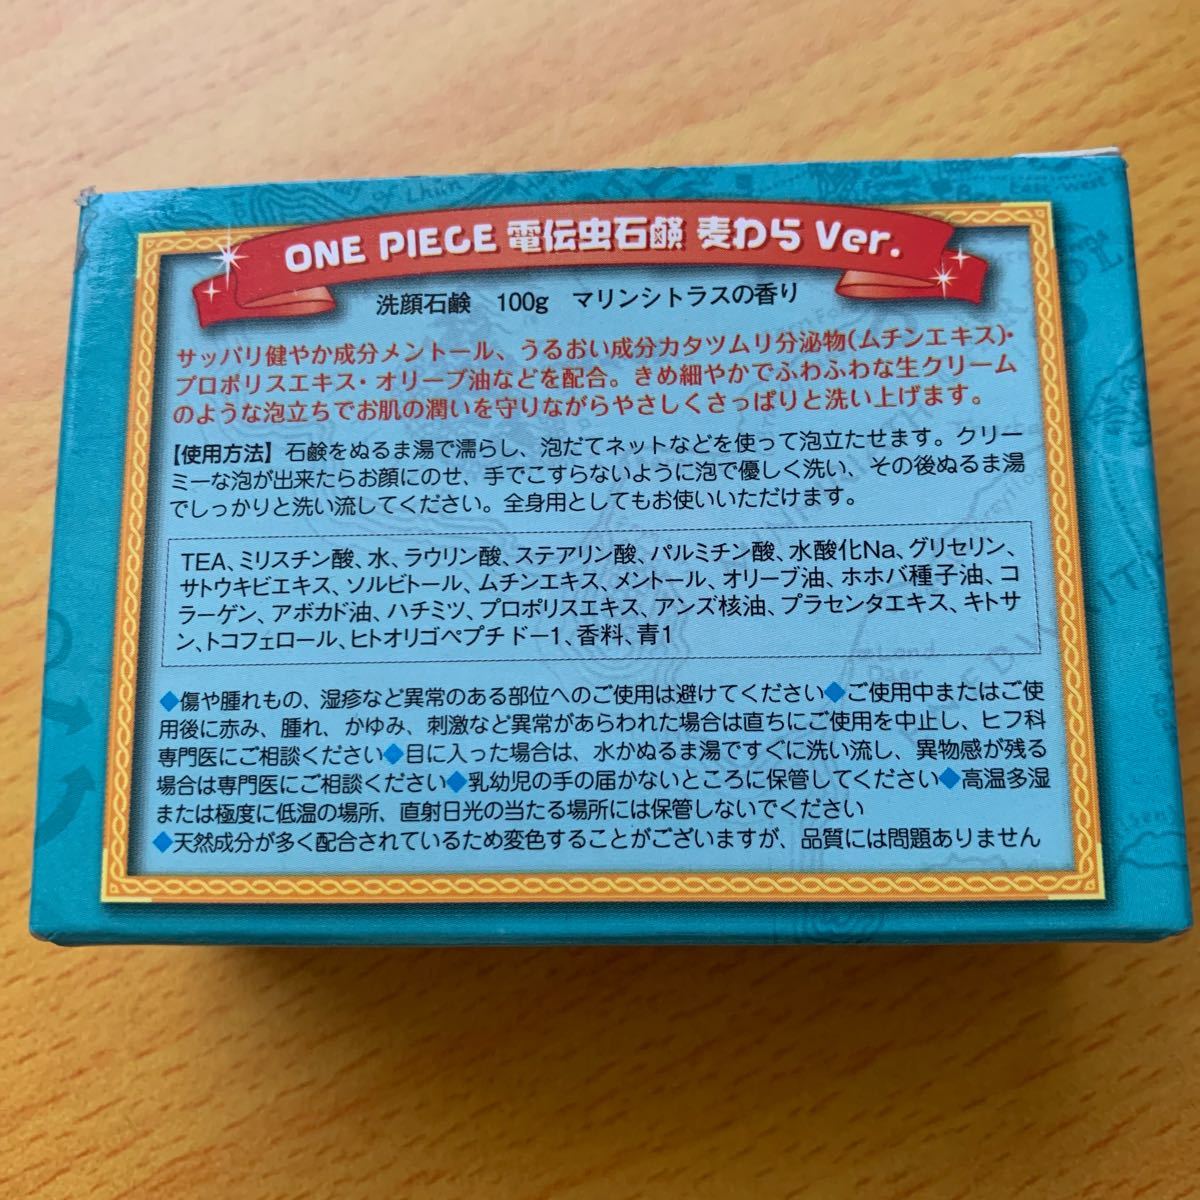 SALE／82%OFF】 ONE PIECE 電伝虫石鹸 ゴールデンVer. dinter.com.hn